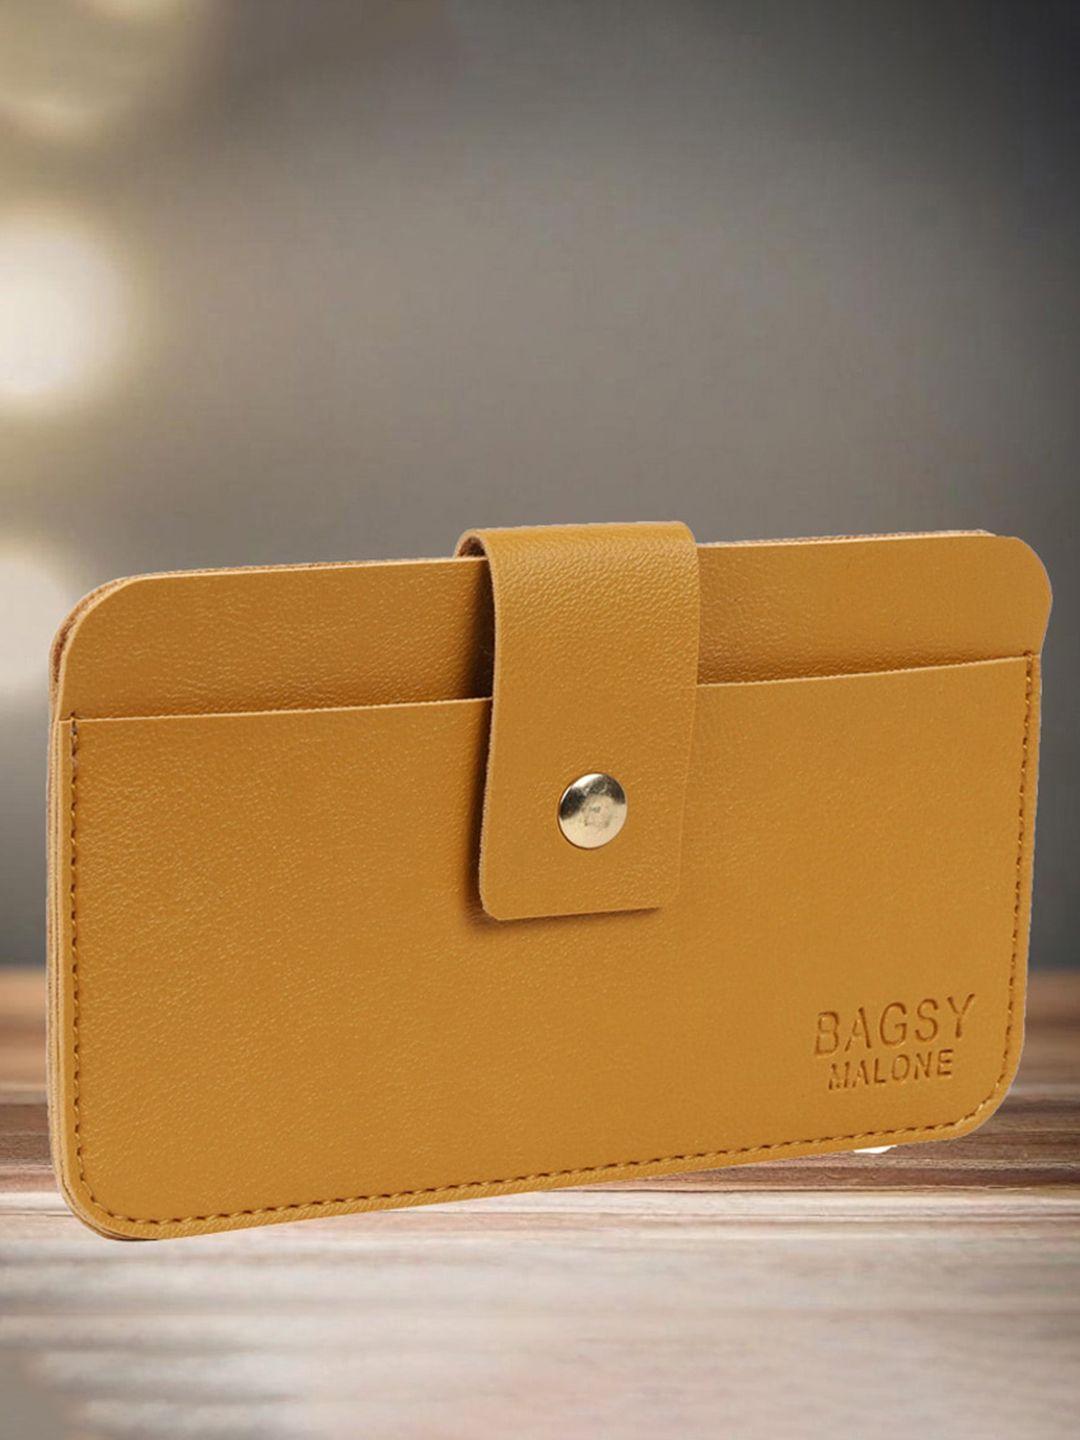 bagsy malone brown purse clutch